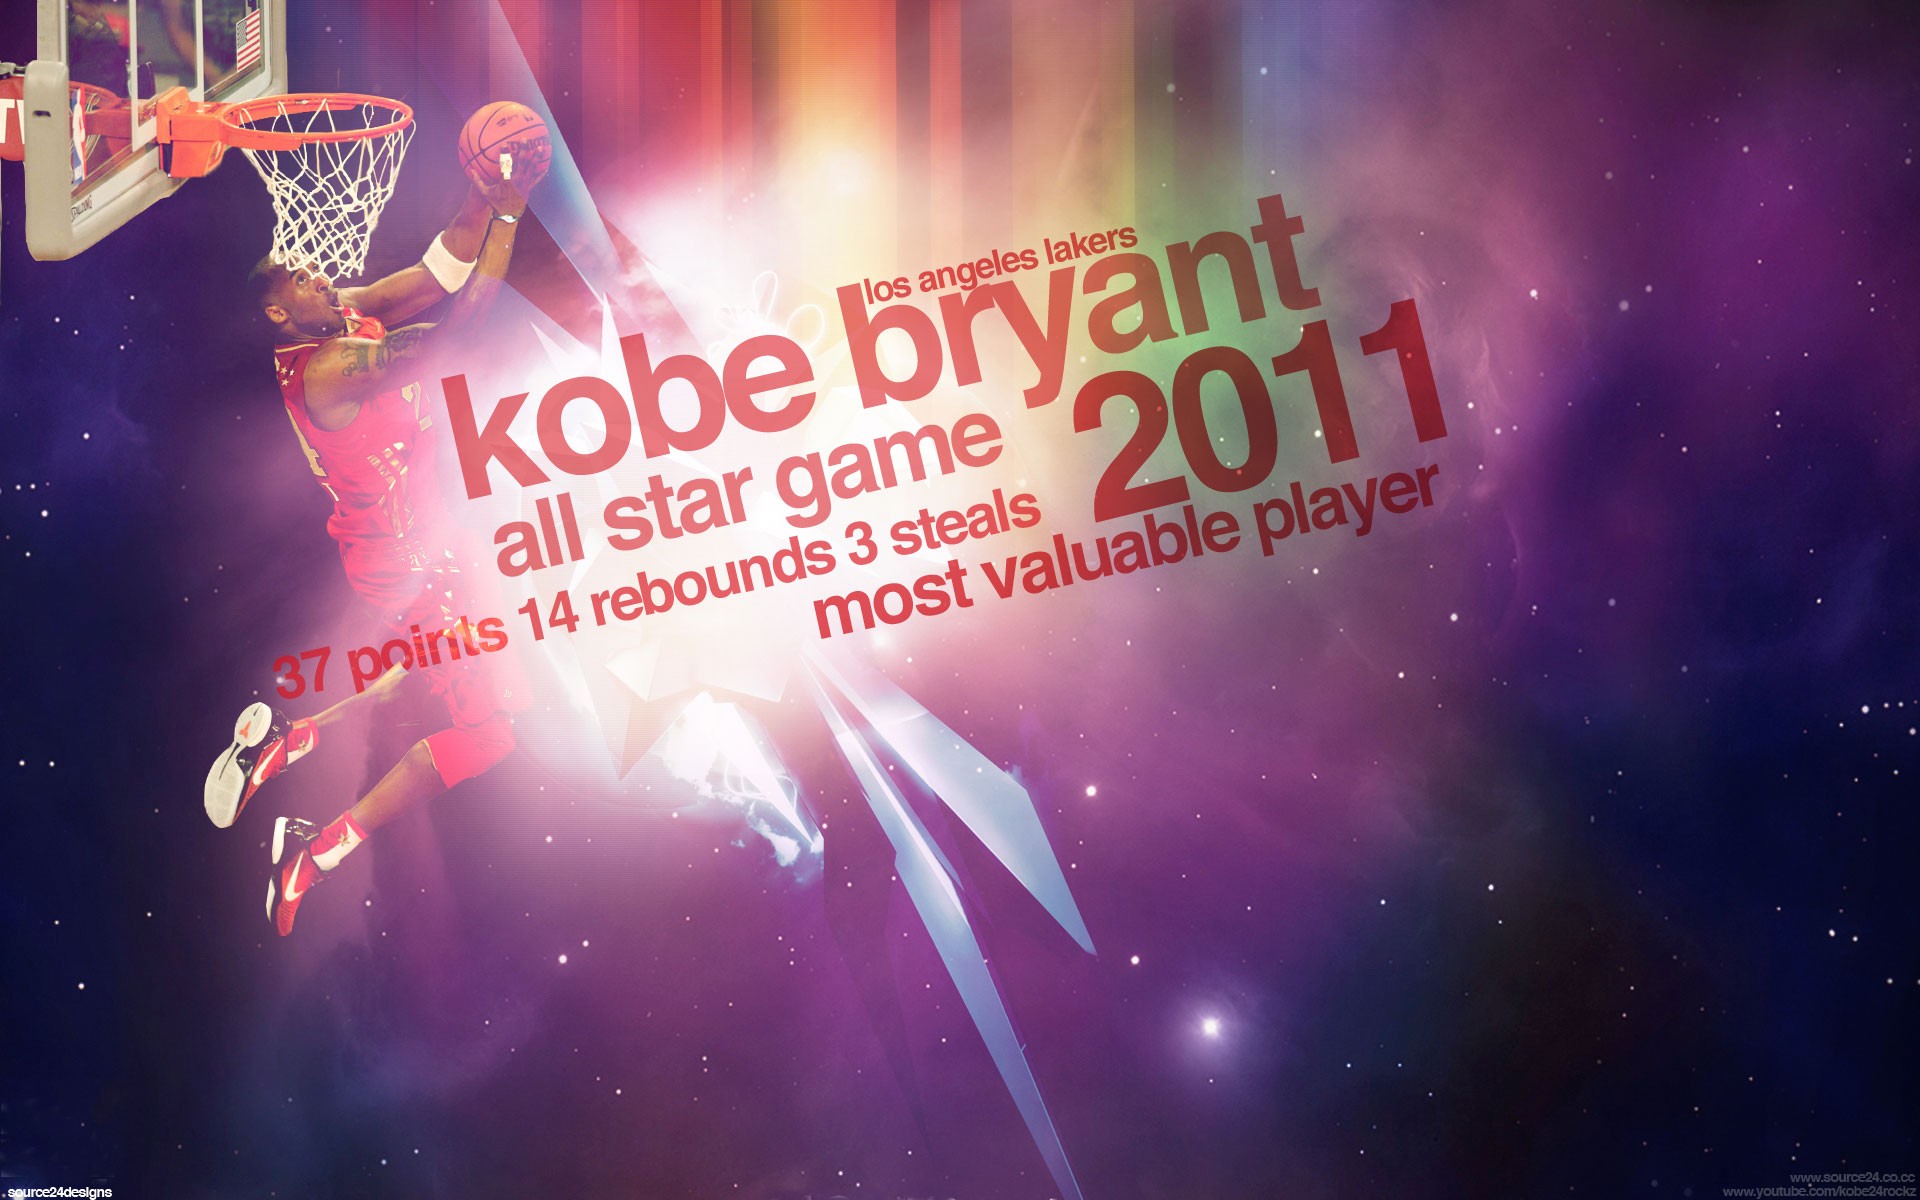 NBA, Kobe Bryant, all star, widescreen, MVP Most Valuable Player - desktop wallpaper